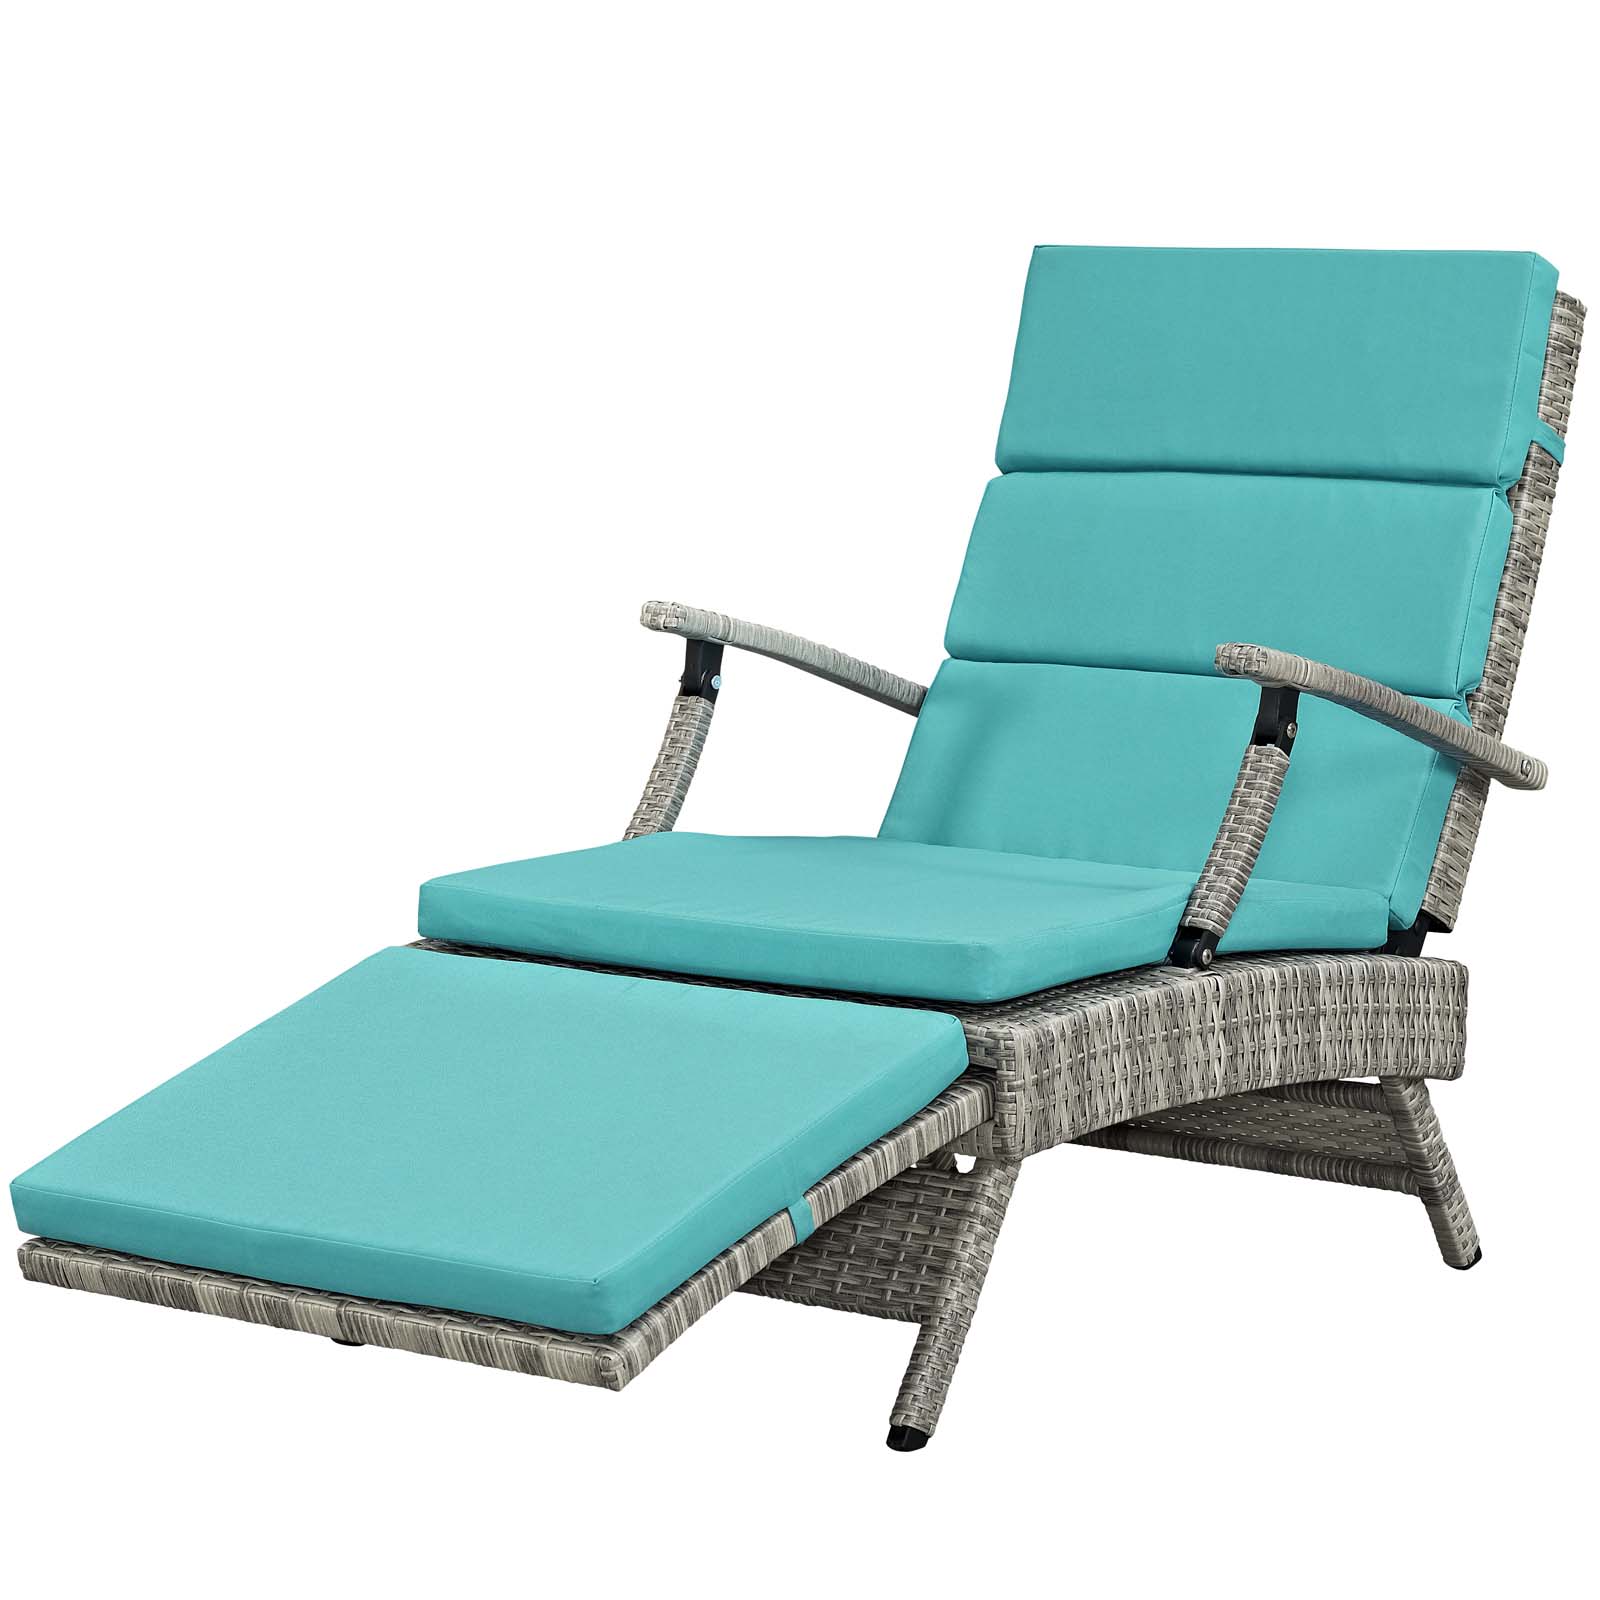 Contemporary Modern Urban Designer Outdoor Patio Balcony Garden Furniture Lounge Chair Chaise, Fabric Rattan Wicker, Blue - image 3 of 9